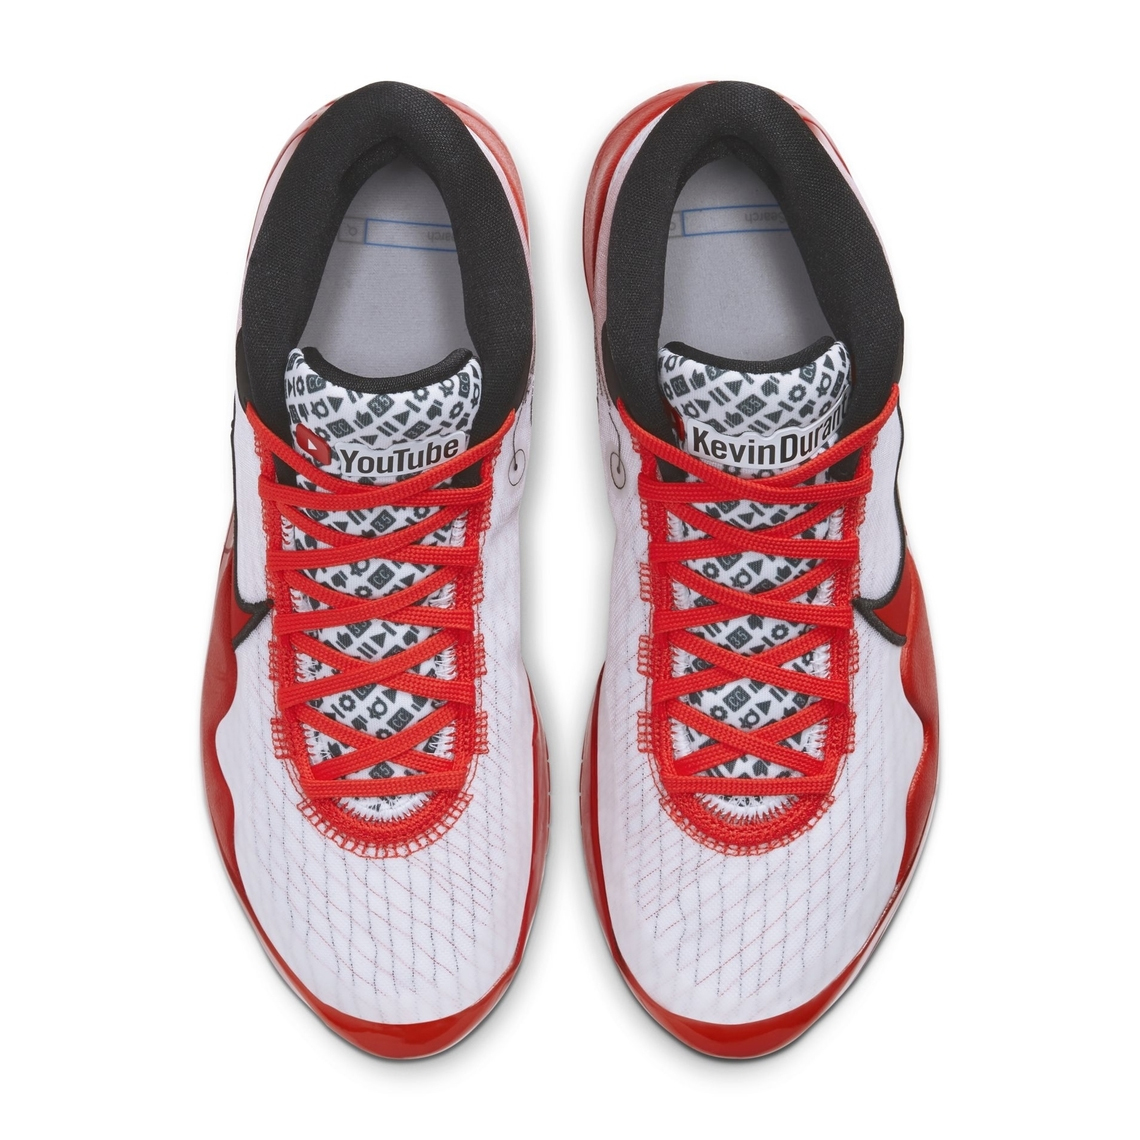 Nike KD 12 YouTube CQ7731-900 | SneakerNews.com